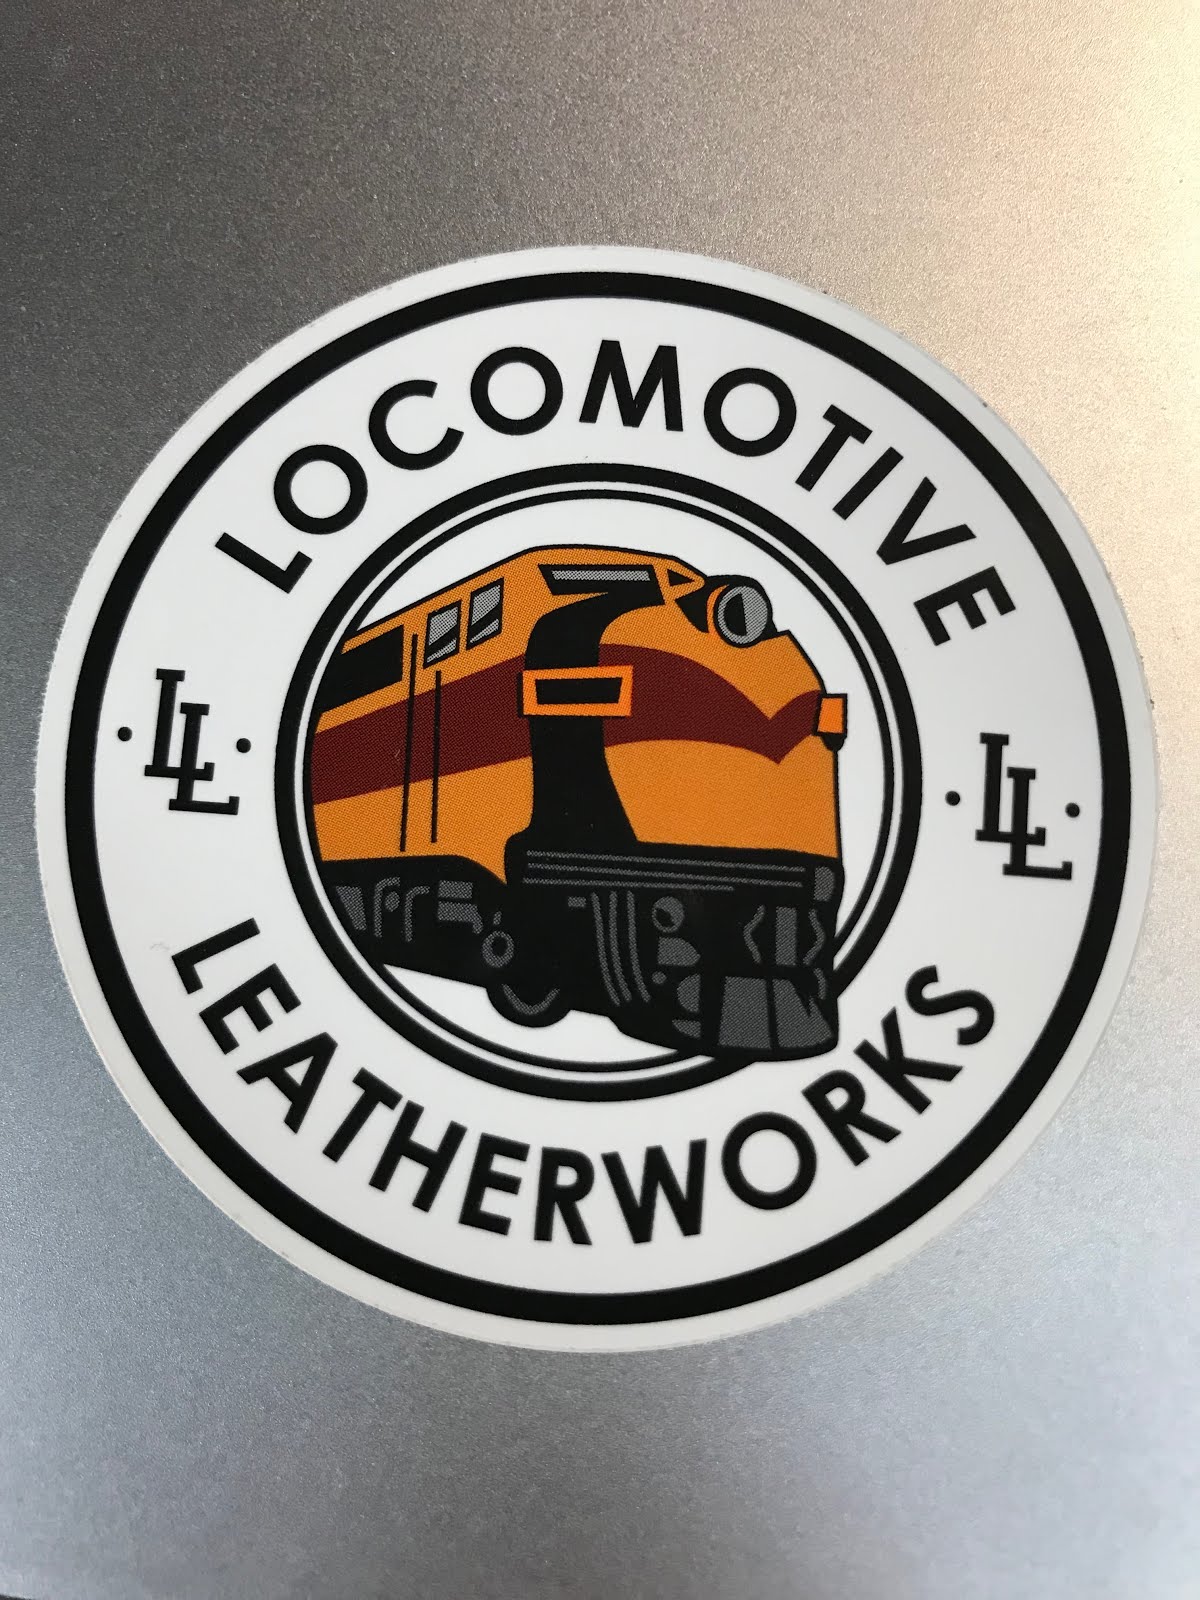 Locomotive Leather Works